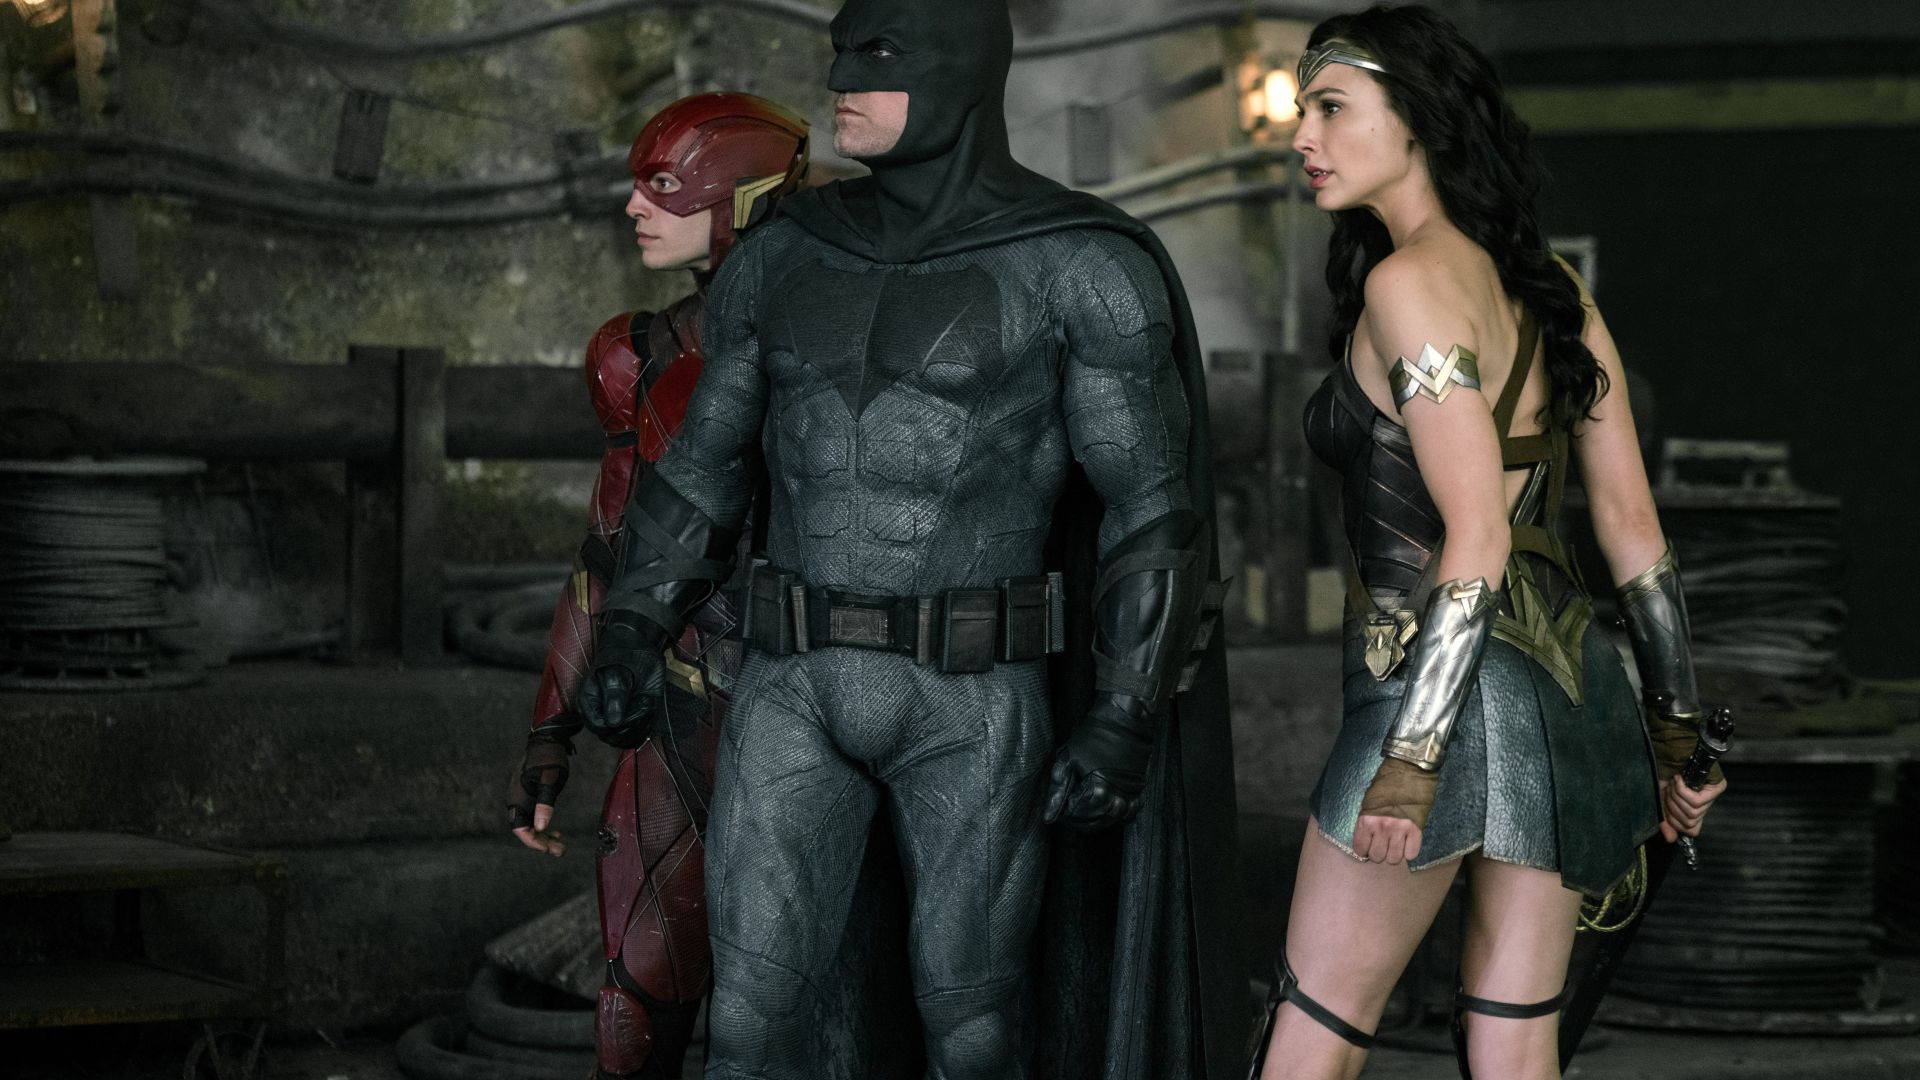 Wallpaper Justice League, wonder woman, The flash, batman, superhero, movie